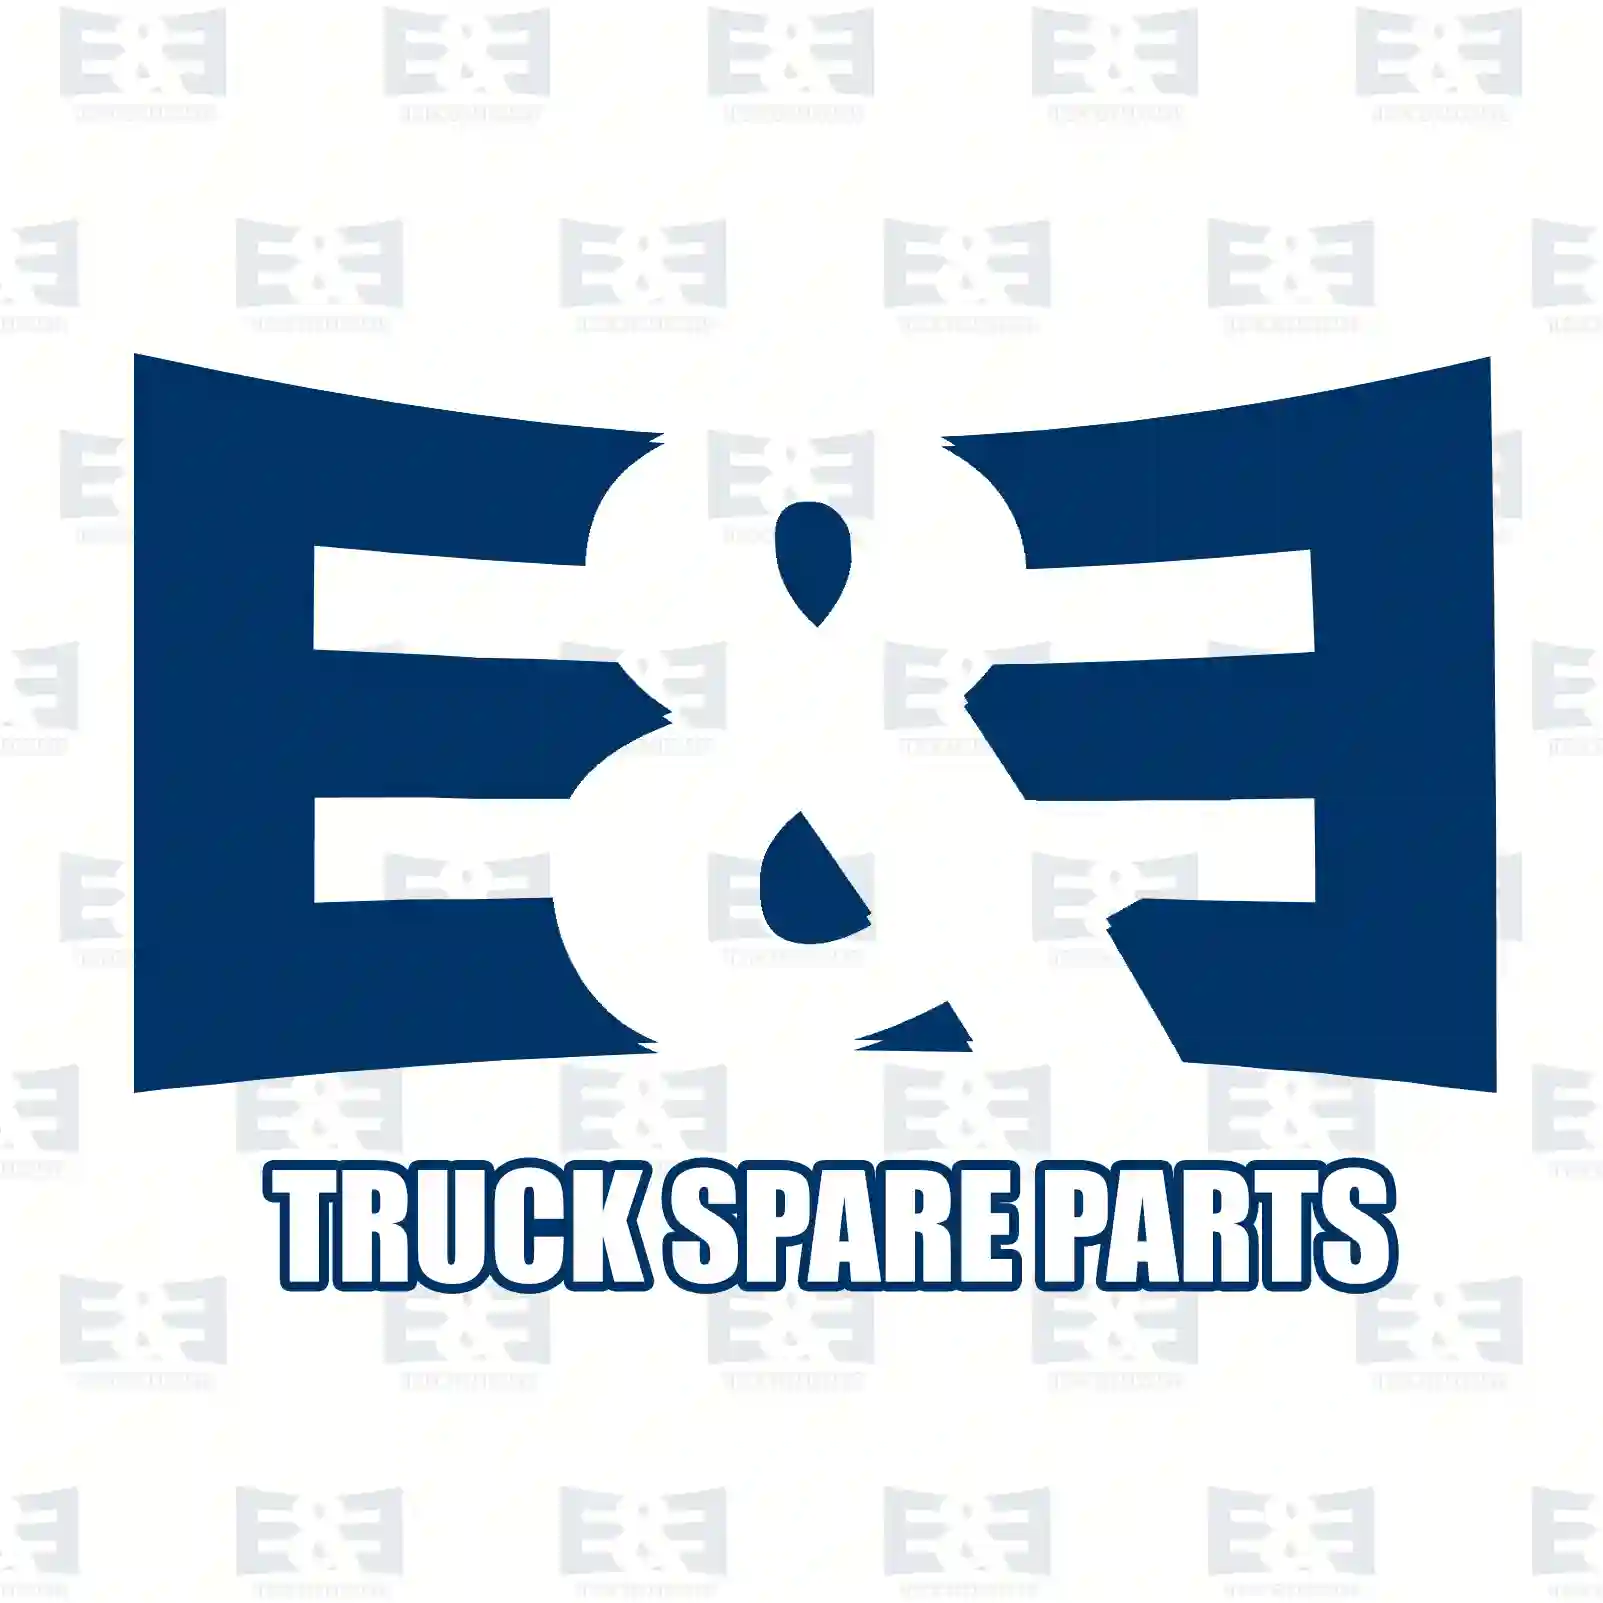  Auxiliary lamp, left || E&E Truck Spare Parts | Truck Spare Parts, Auotomotive Spare Parts